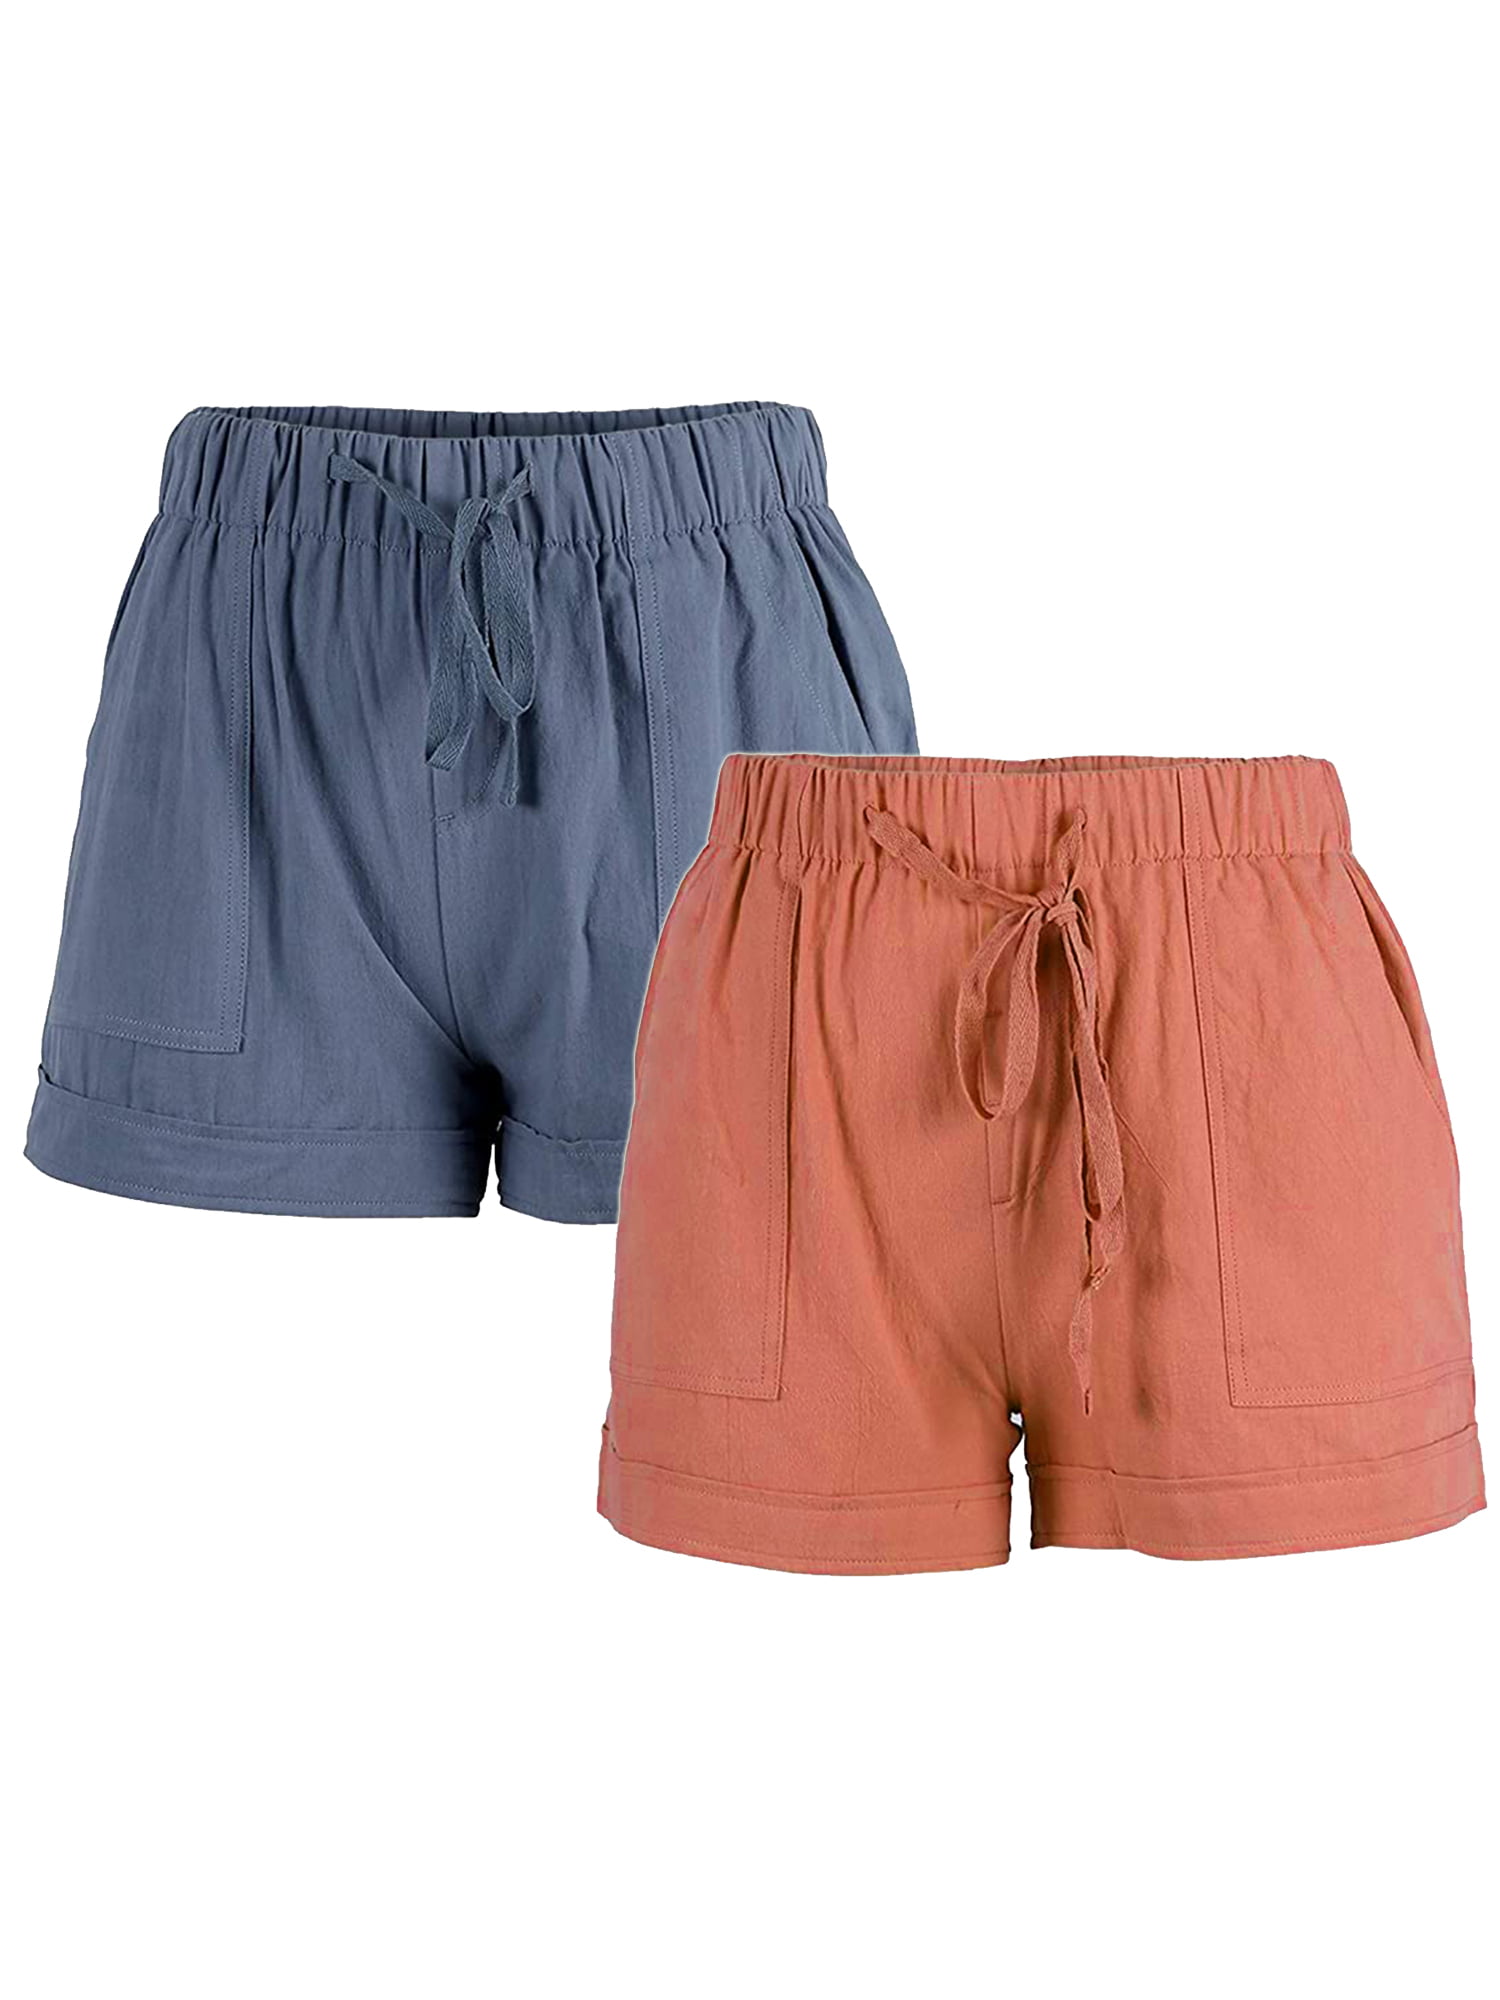 Womens Casual Drawstring Elastic Waist Comfy Cotton Beach Shorts with Pockets